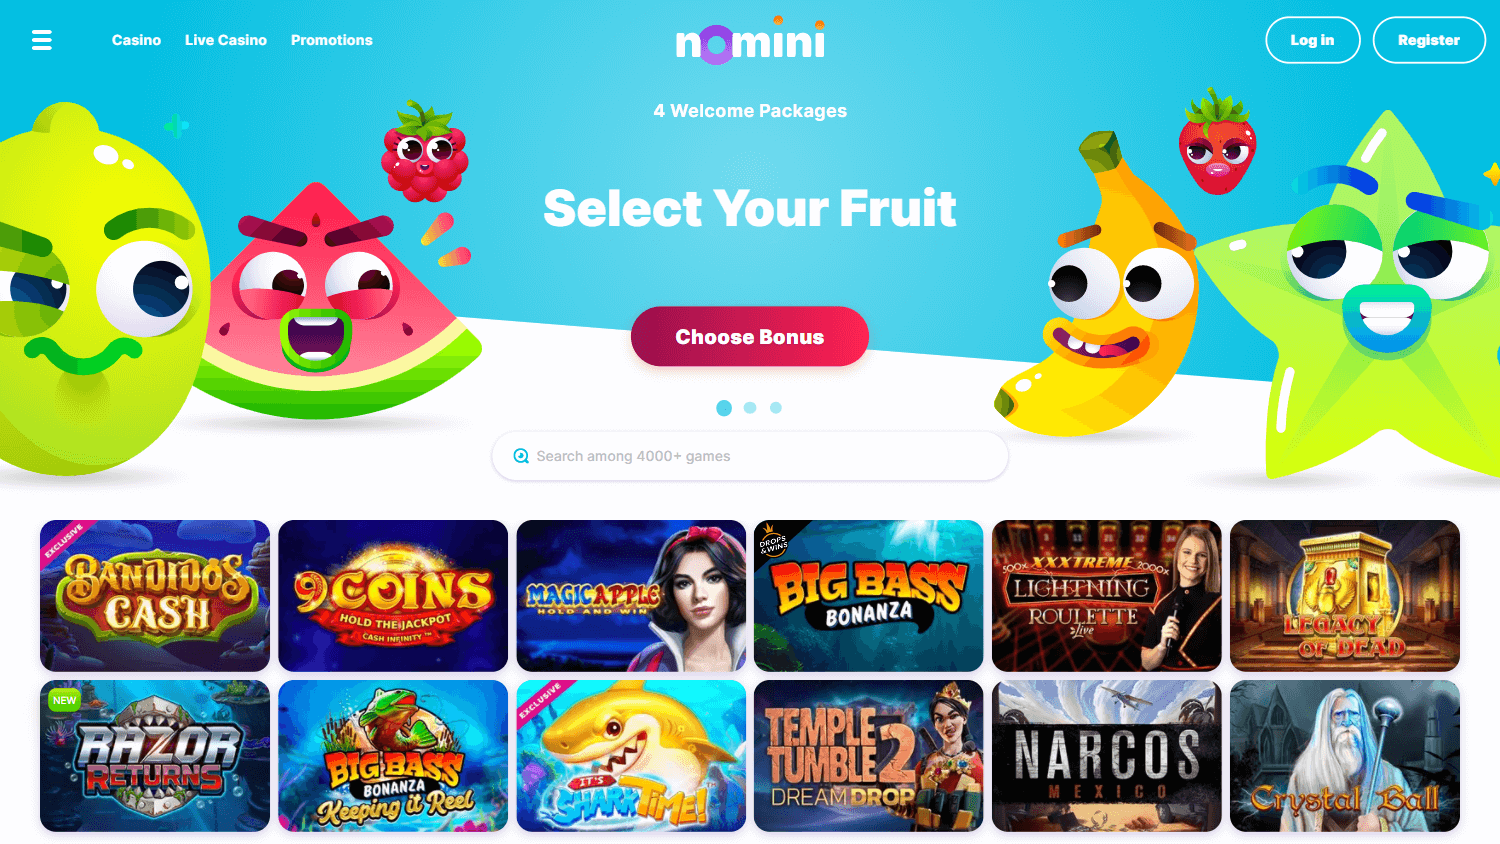 nomini_casino_homepage_desktop